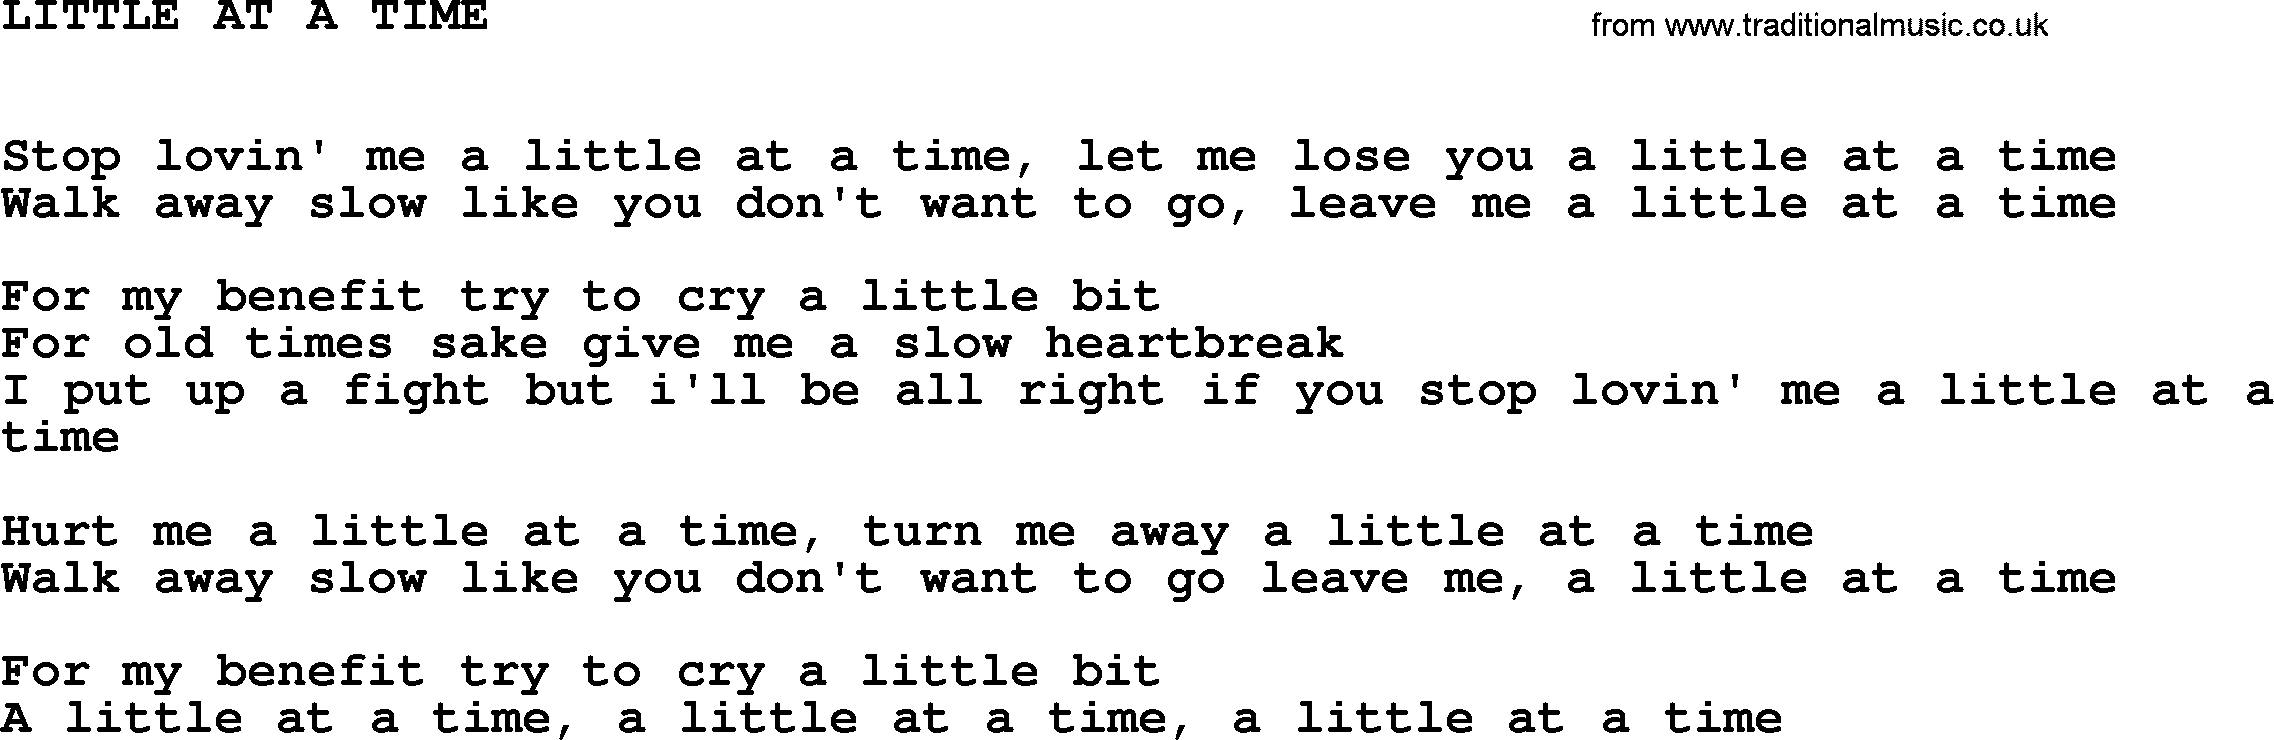 Johnny Cash song Little At A Time.txt lyrics